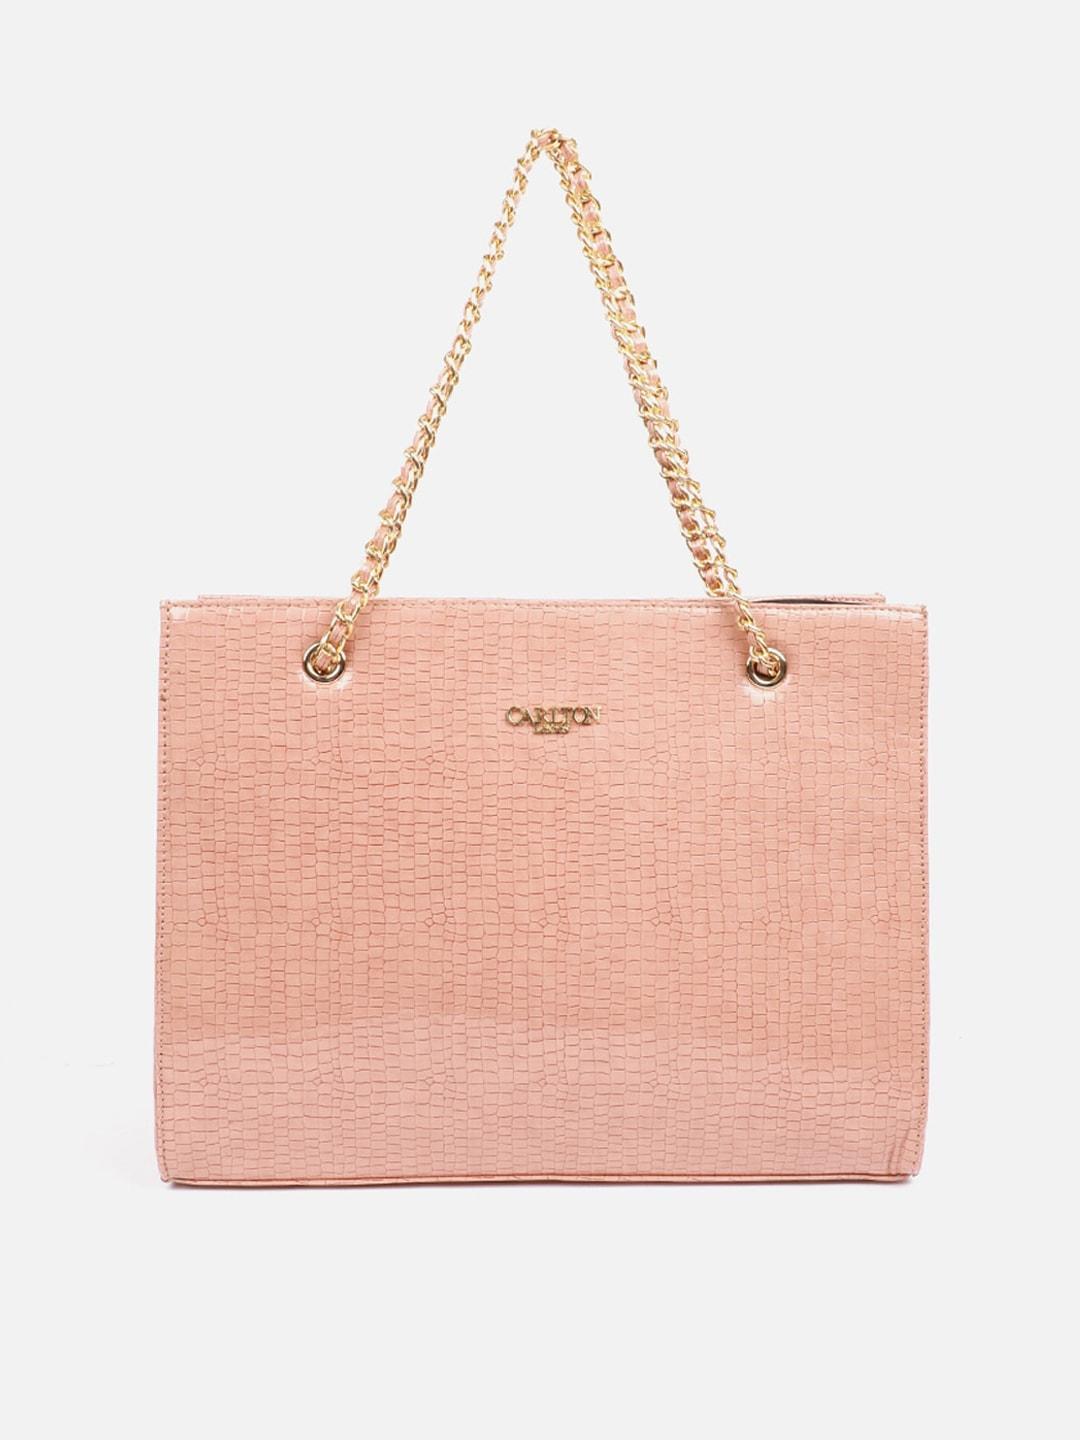 Carlton London Women Peach Textured Synthetic Handheld Bag